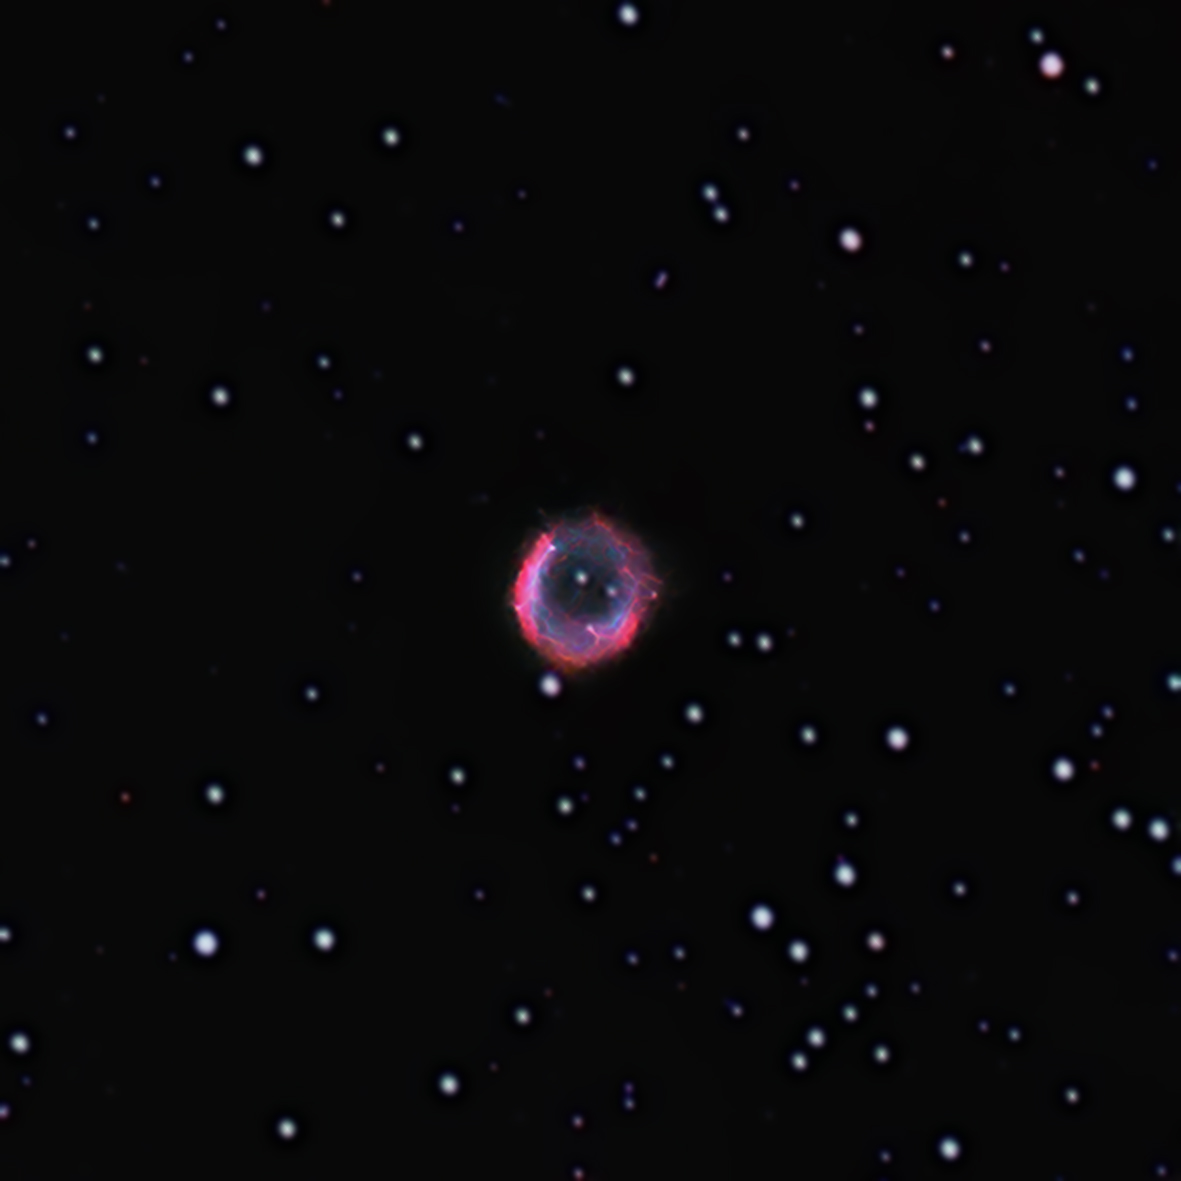 https://www.astrofilicernusco.org/storage/2020/12/NGC-2438-1-hr-15-mn-25-immagini13-01-2018-_-Pioltello_OK.jpg